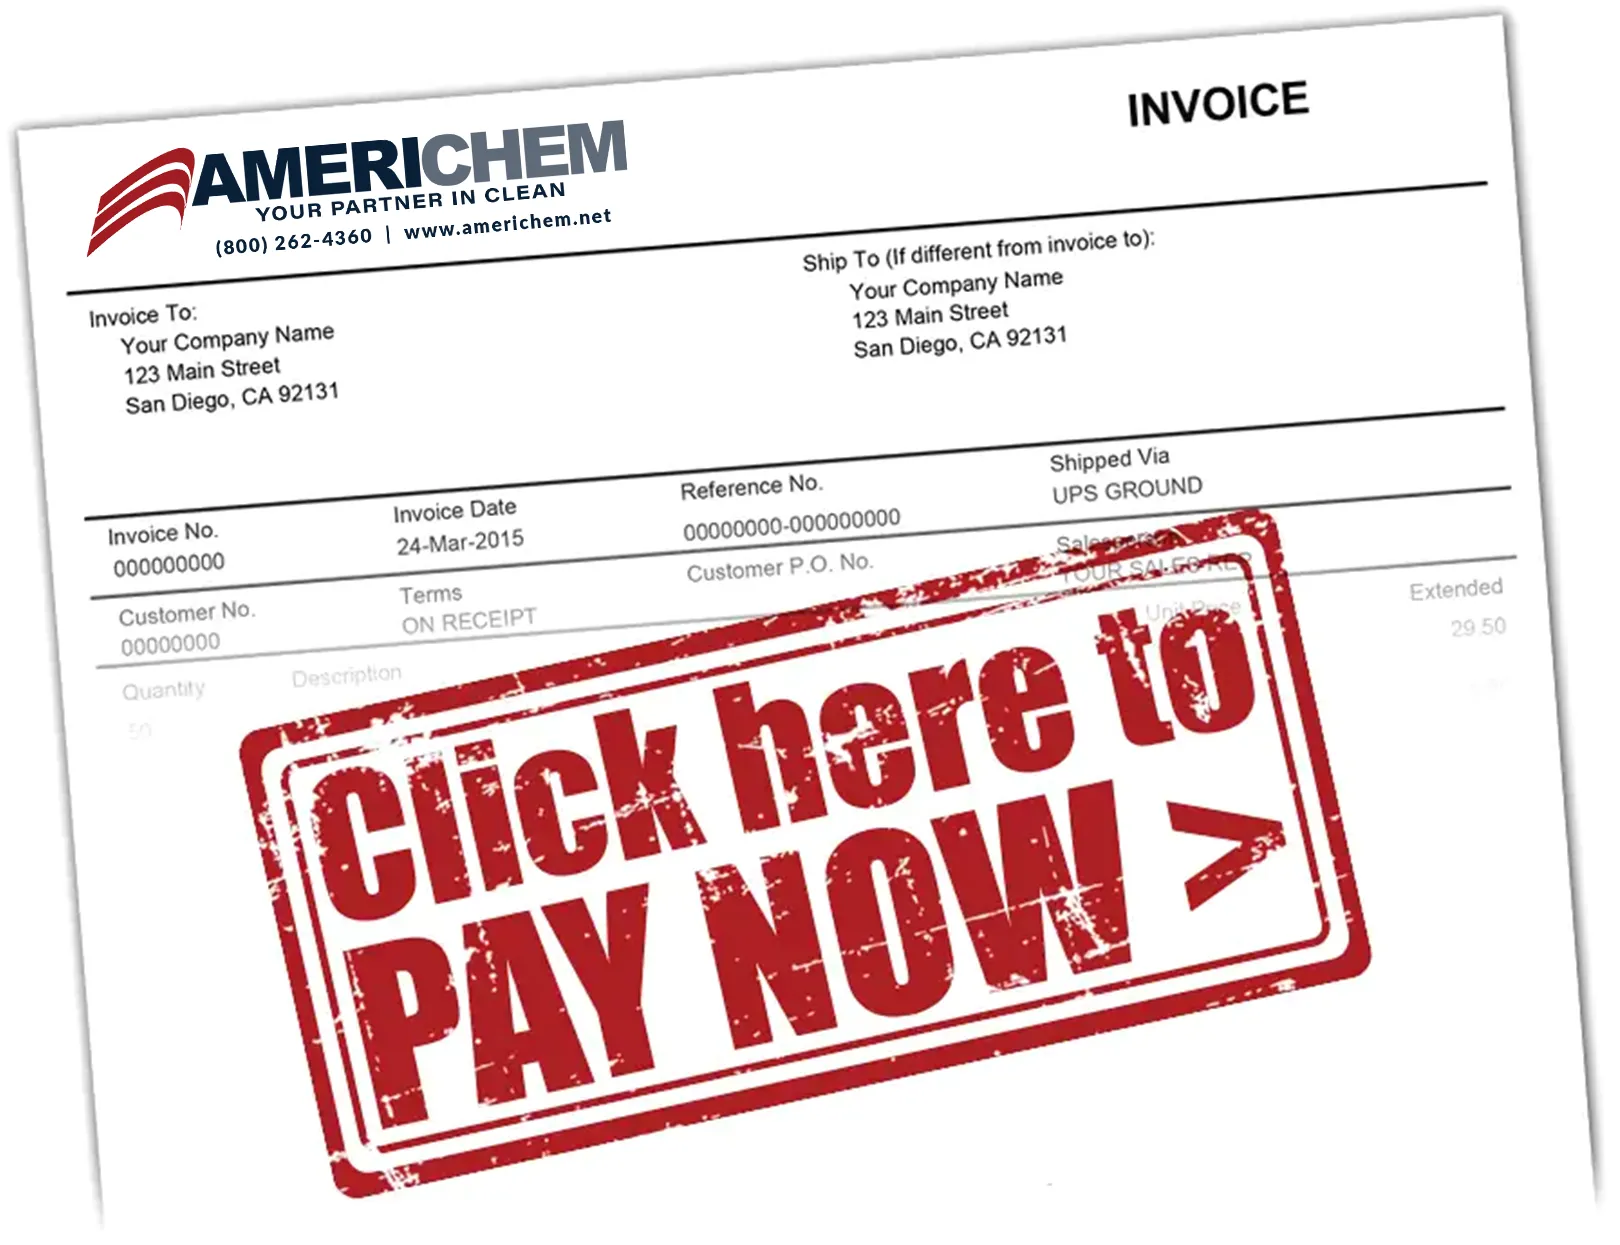 Americhem Payment copy